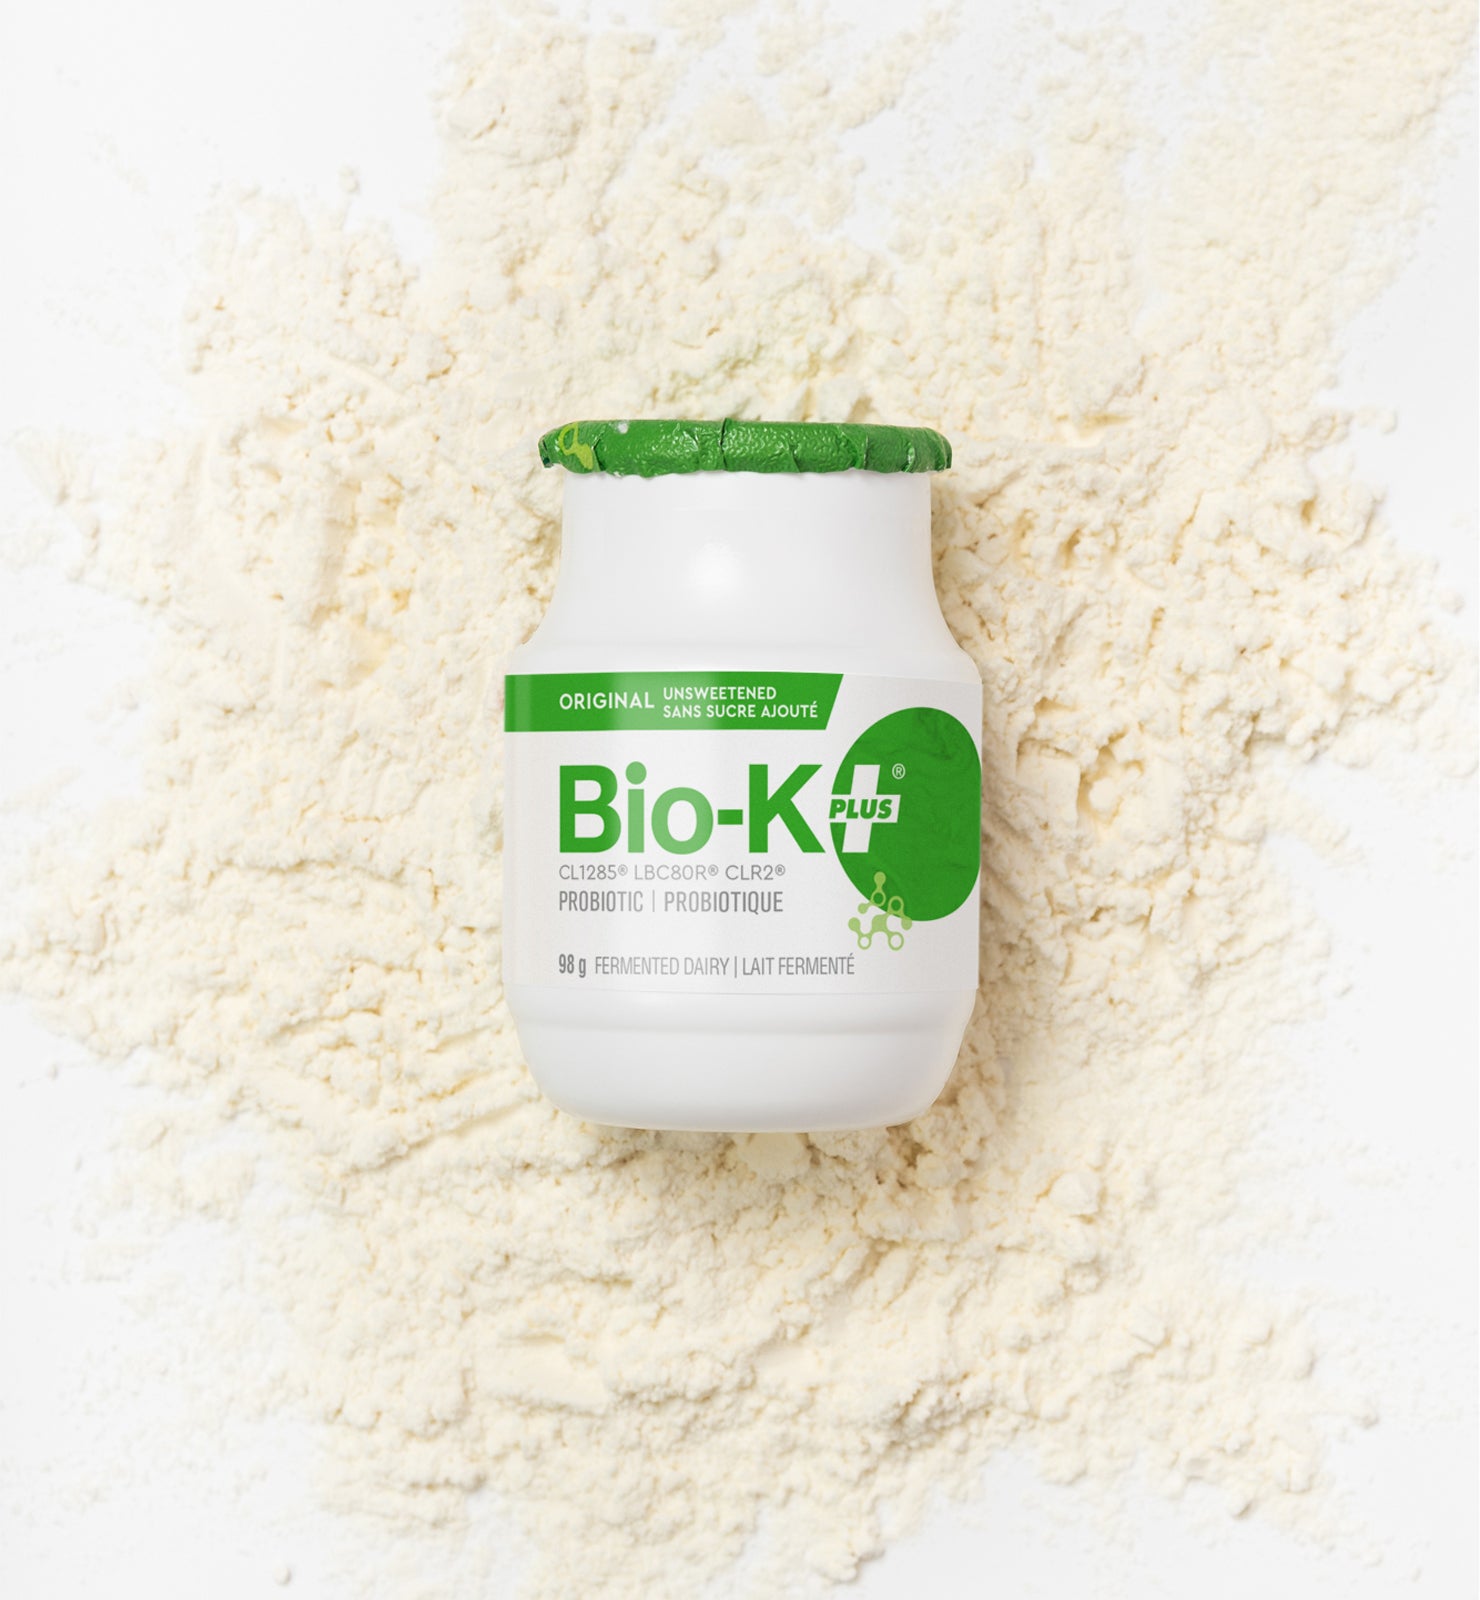 Bottle of Bio-K+ Drinkable - Original unsweetened